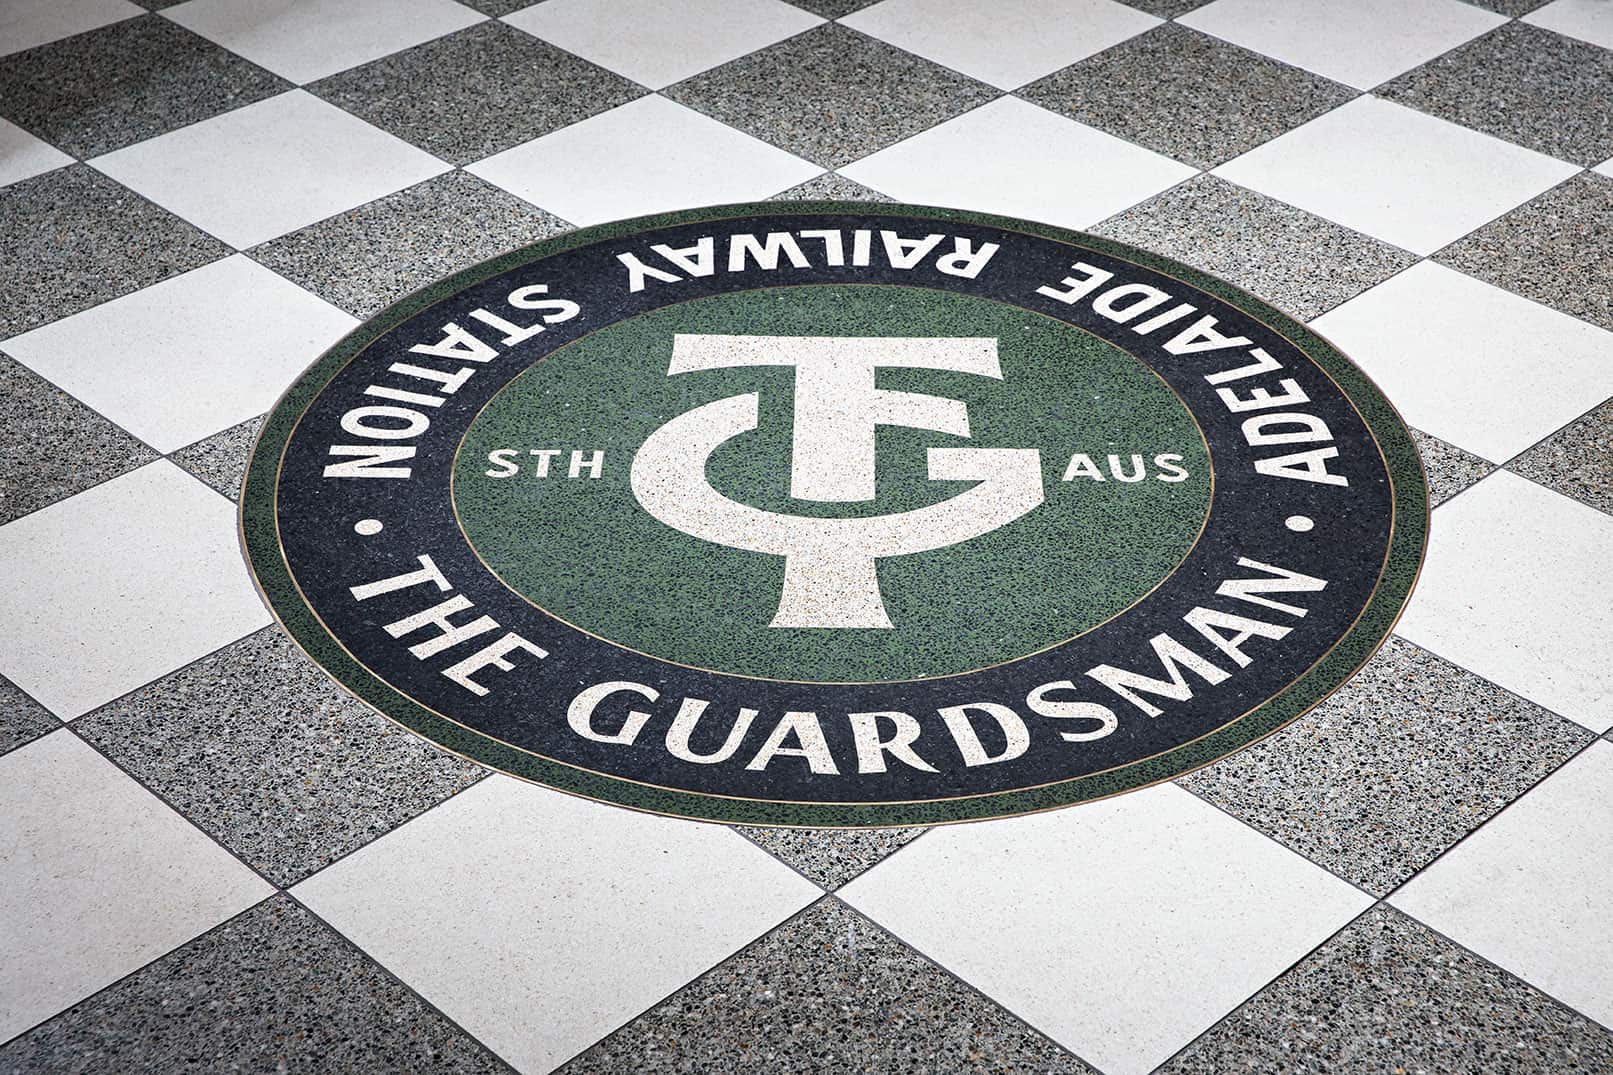 The Guardsman Terrazzo Art Adelaide